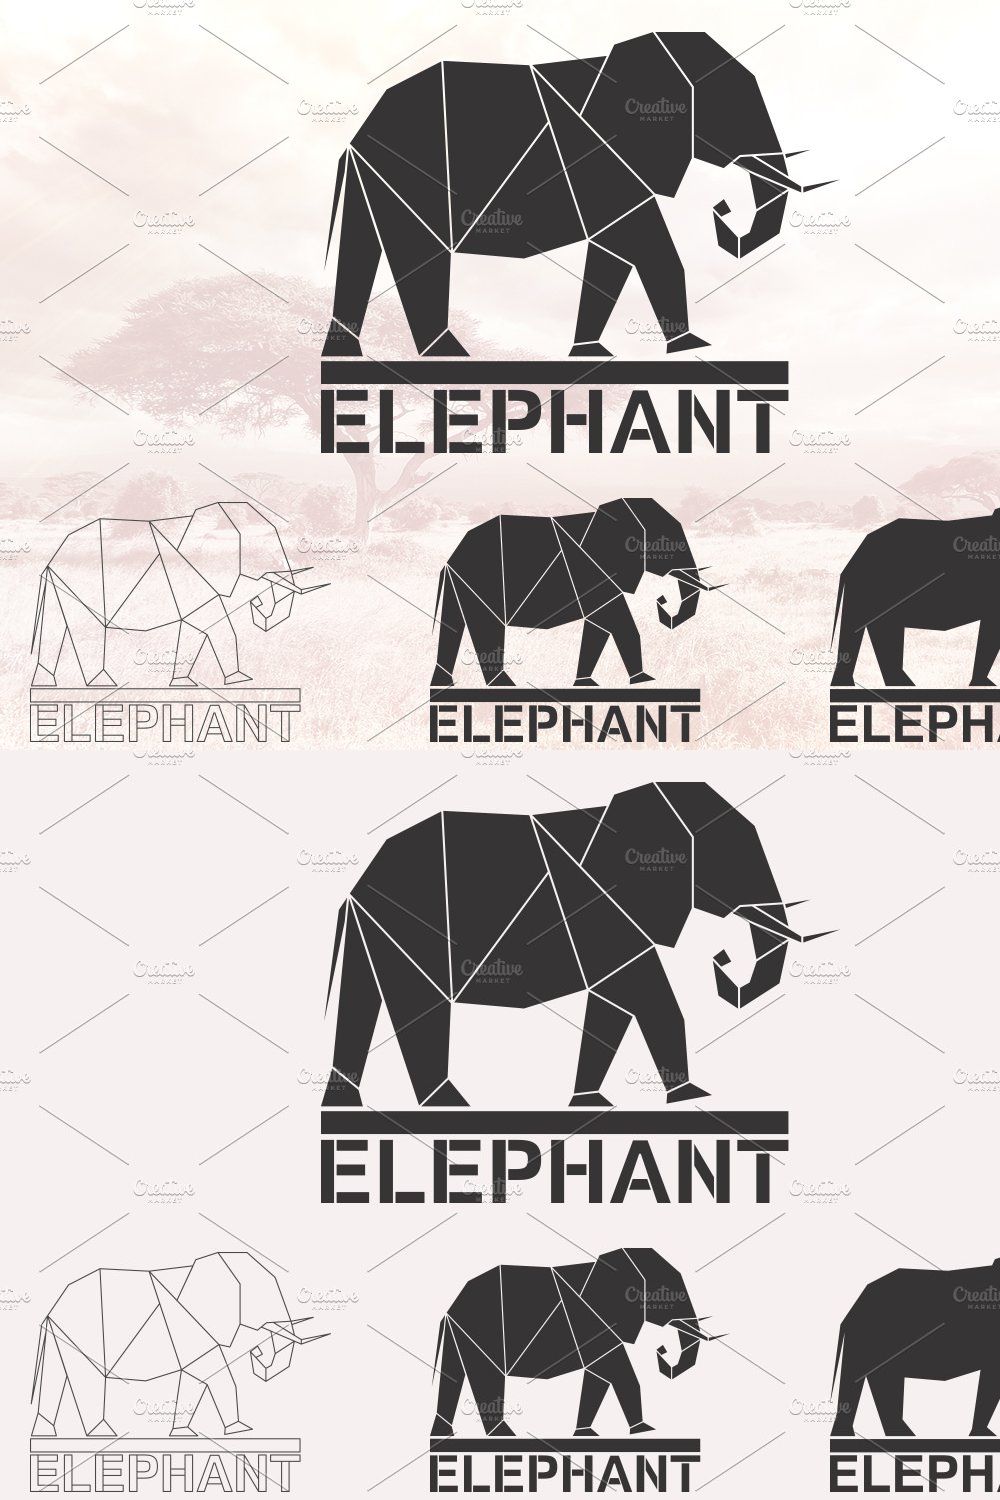 Elephant logo set pinterest preview image.